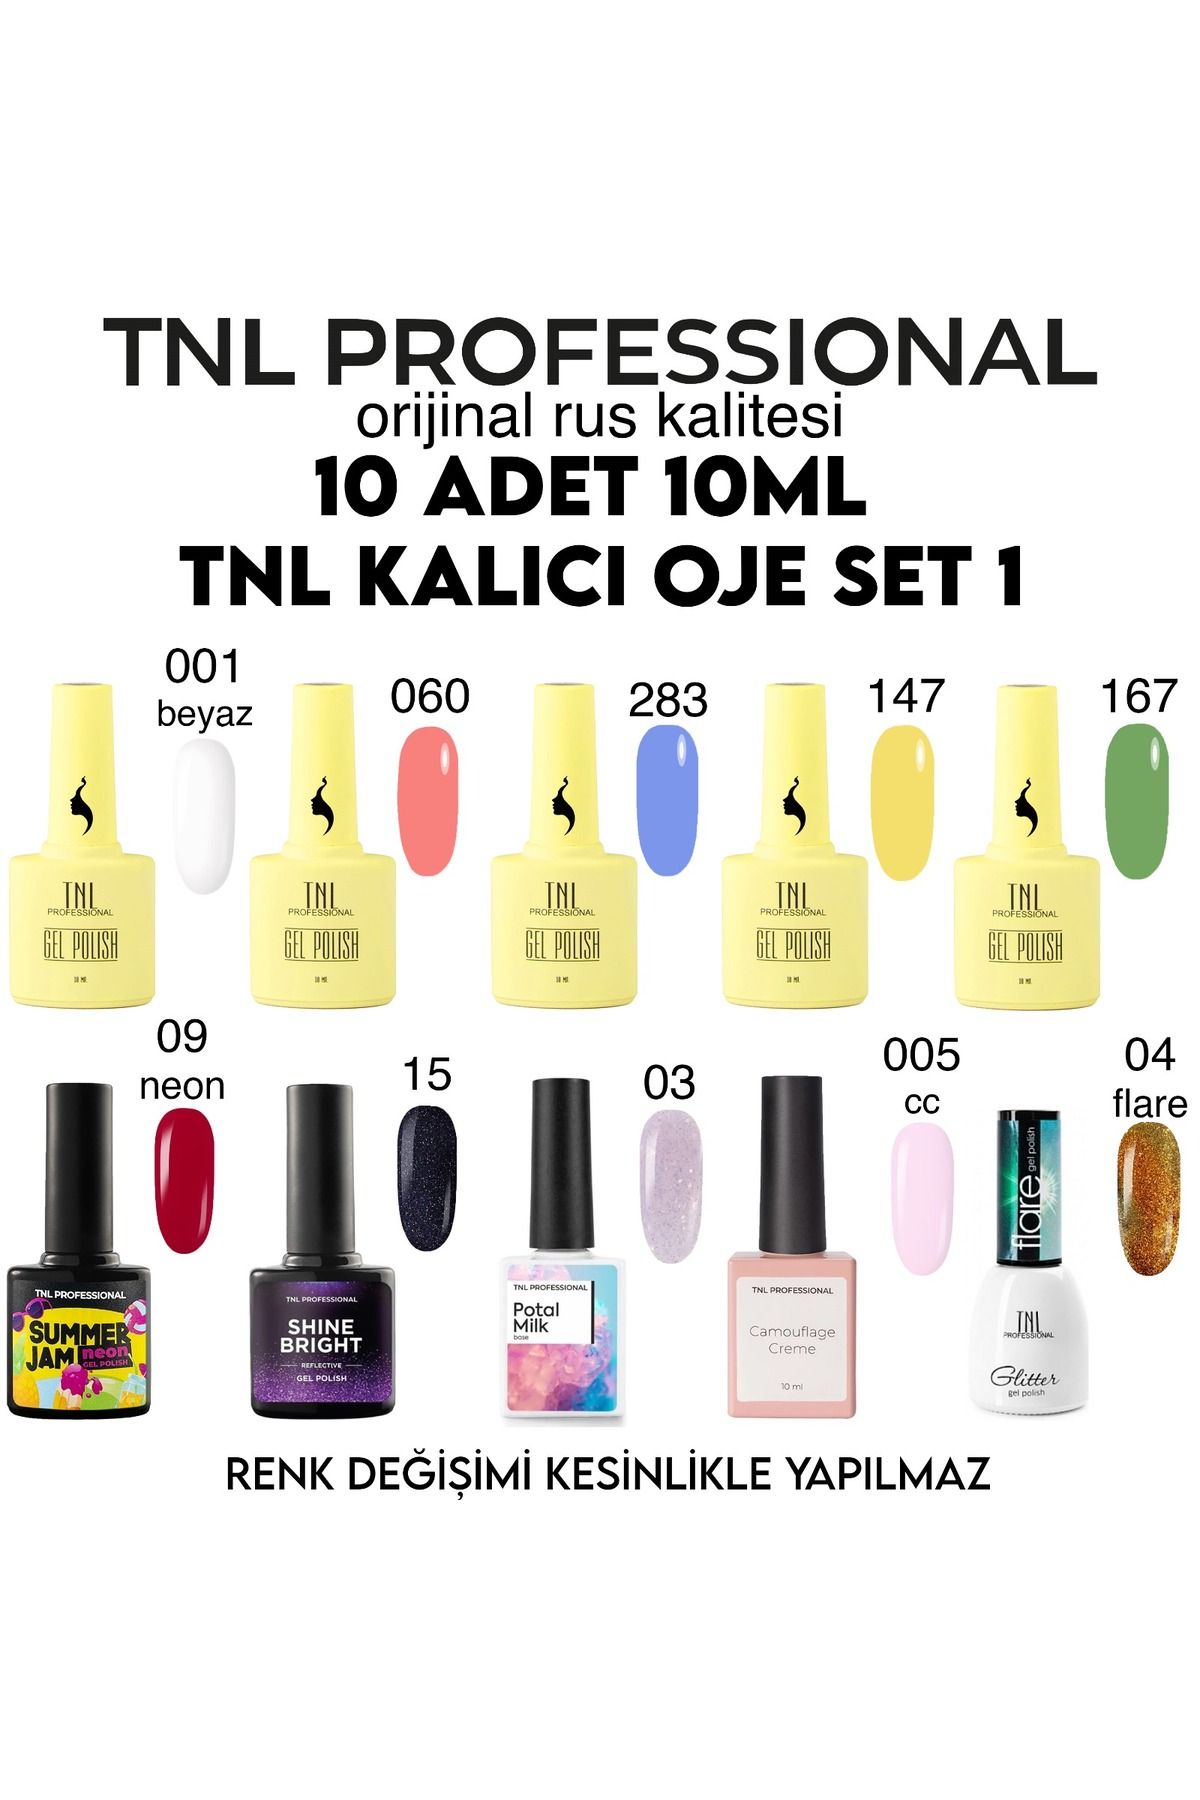 tnl professional TNL PROFESSİONAL TOPLAM 10 ADET 10ML KALICI OJE SETİ